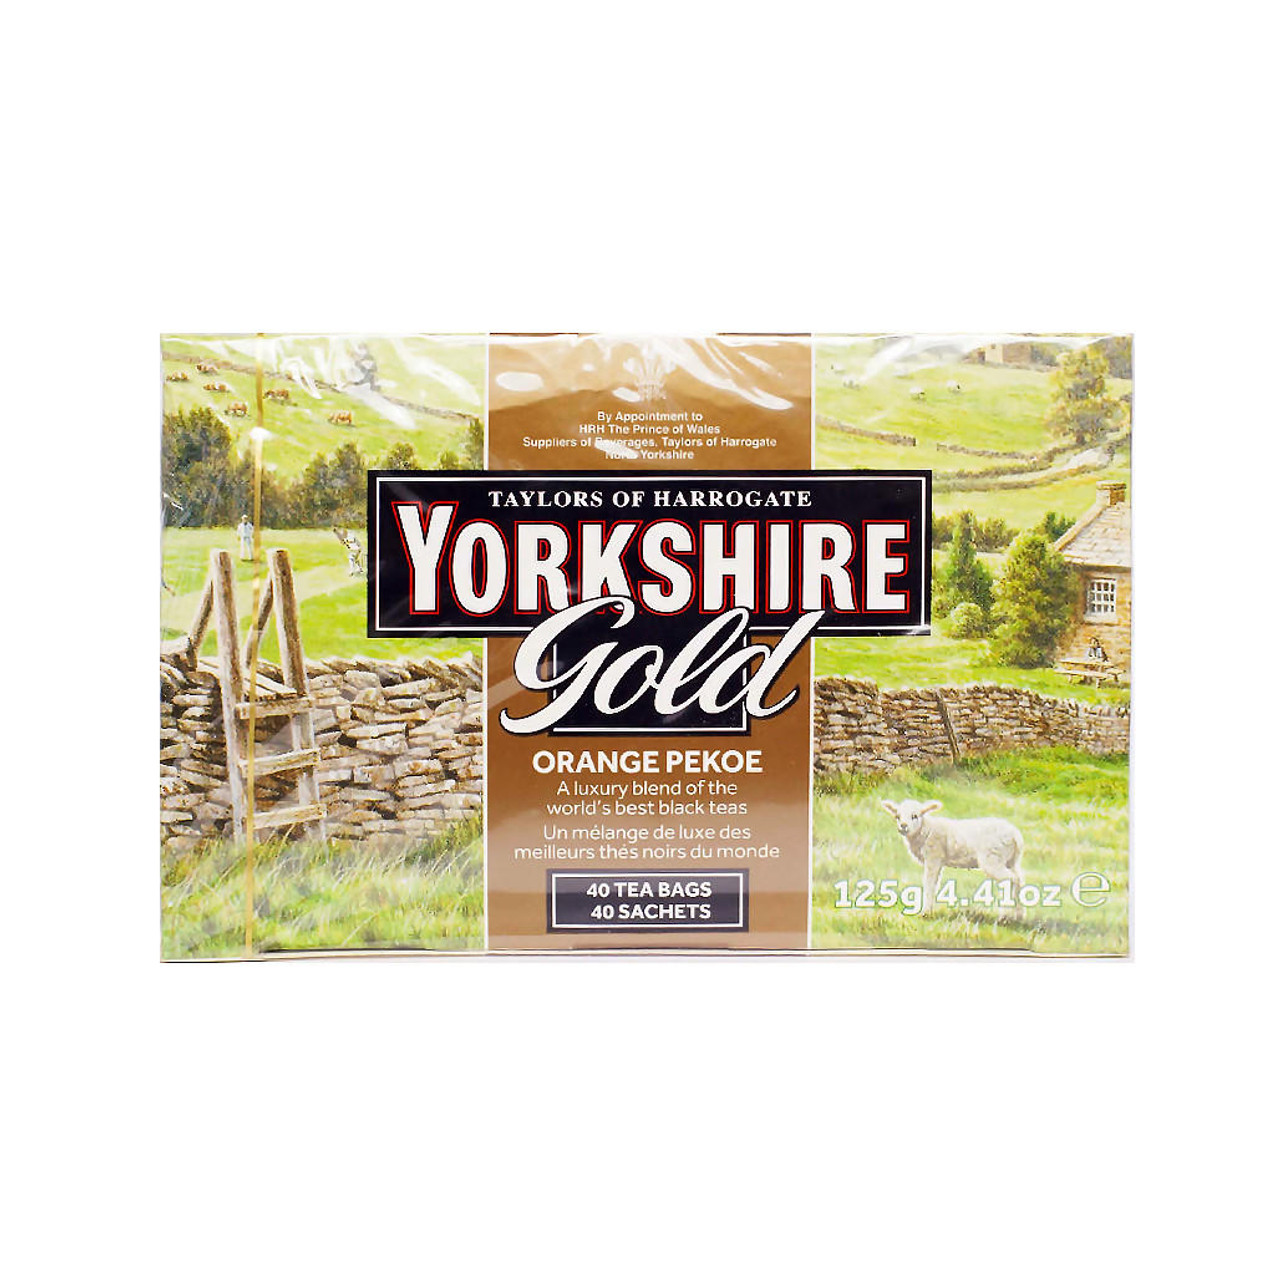 Taylors of Harrogate Yorkshire Gold Tea Bags 80 per pack - Pack of 2